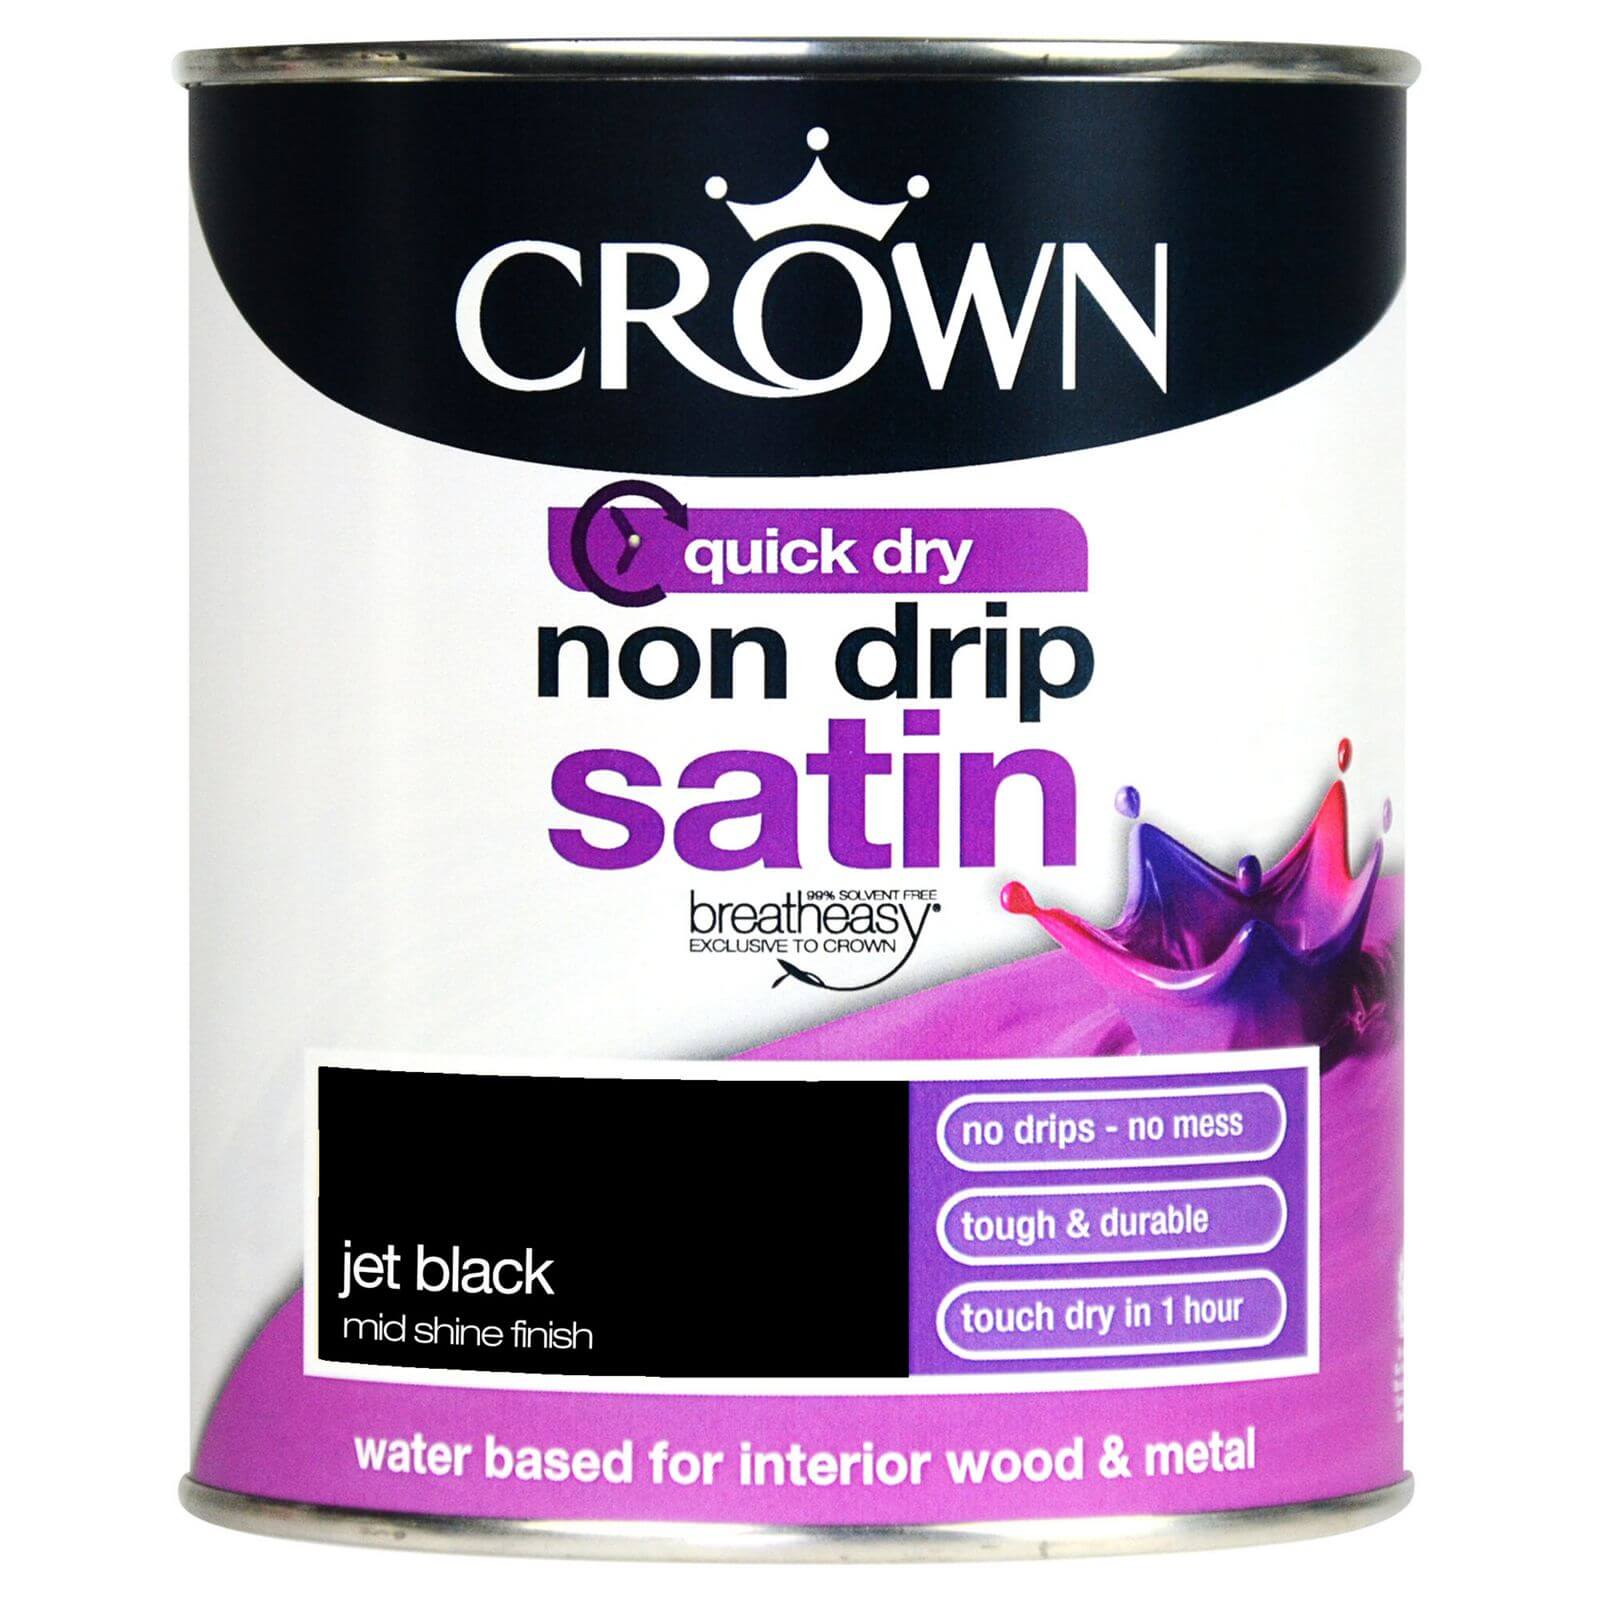 Crown Standard Breatheasy Non Drip Satin Paint Jet Black - 750ml